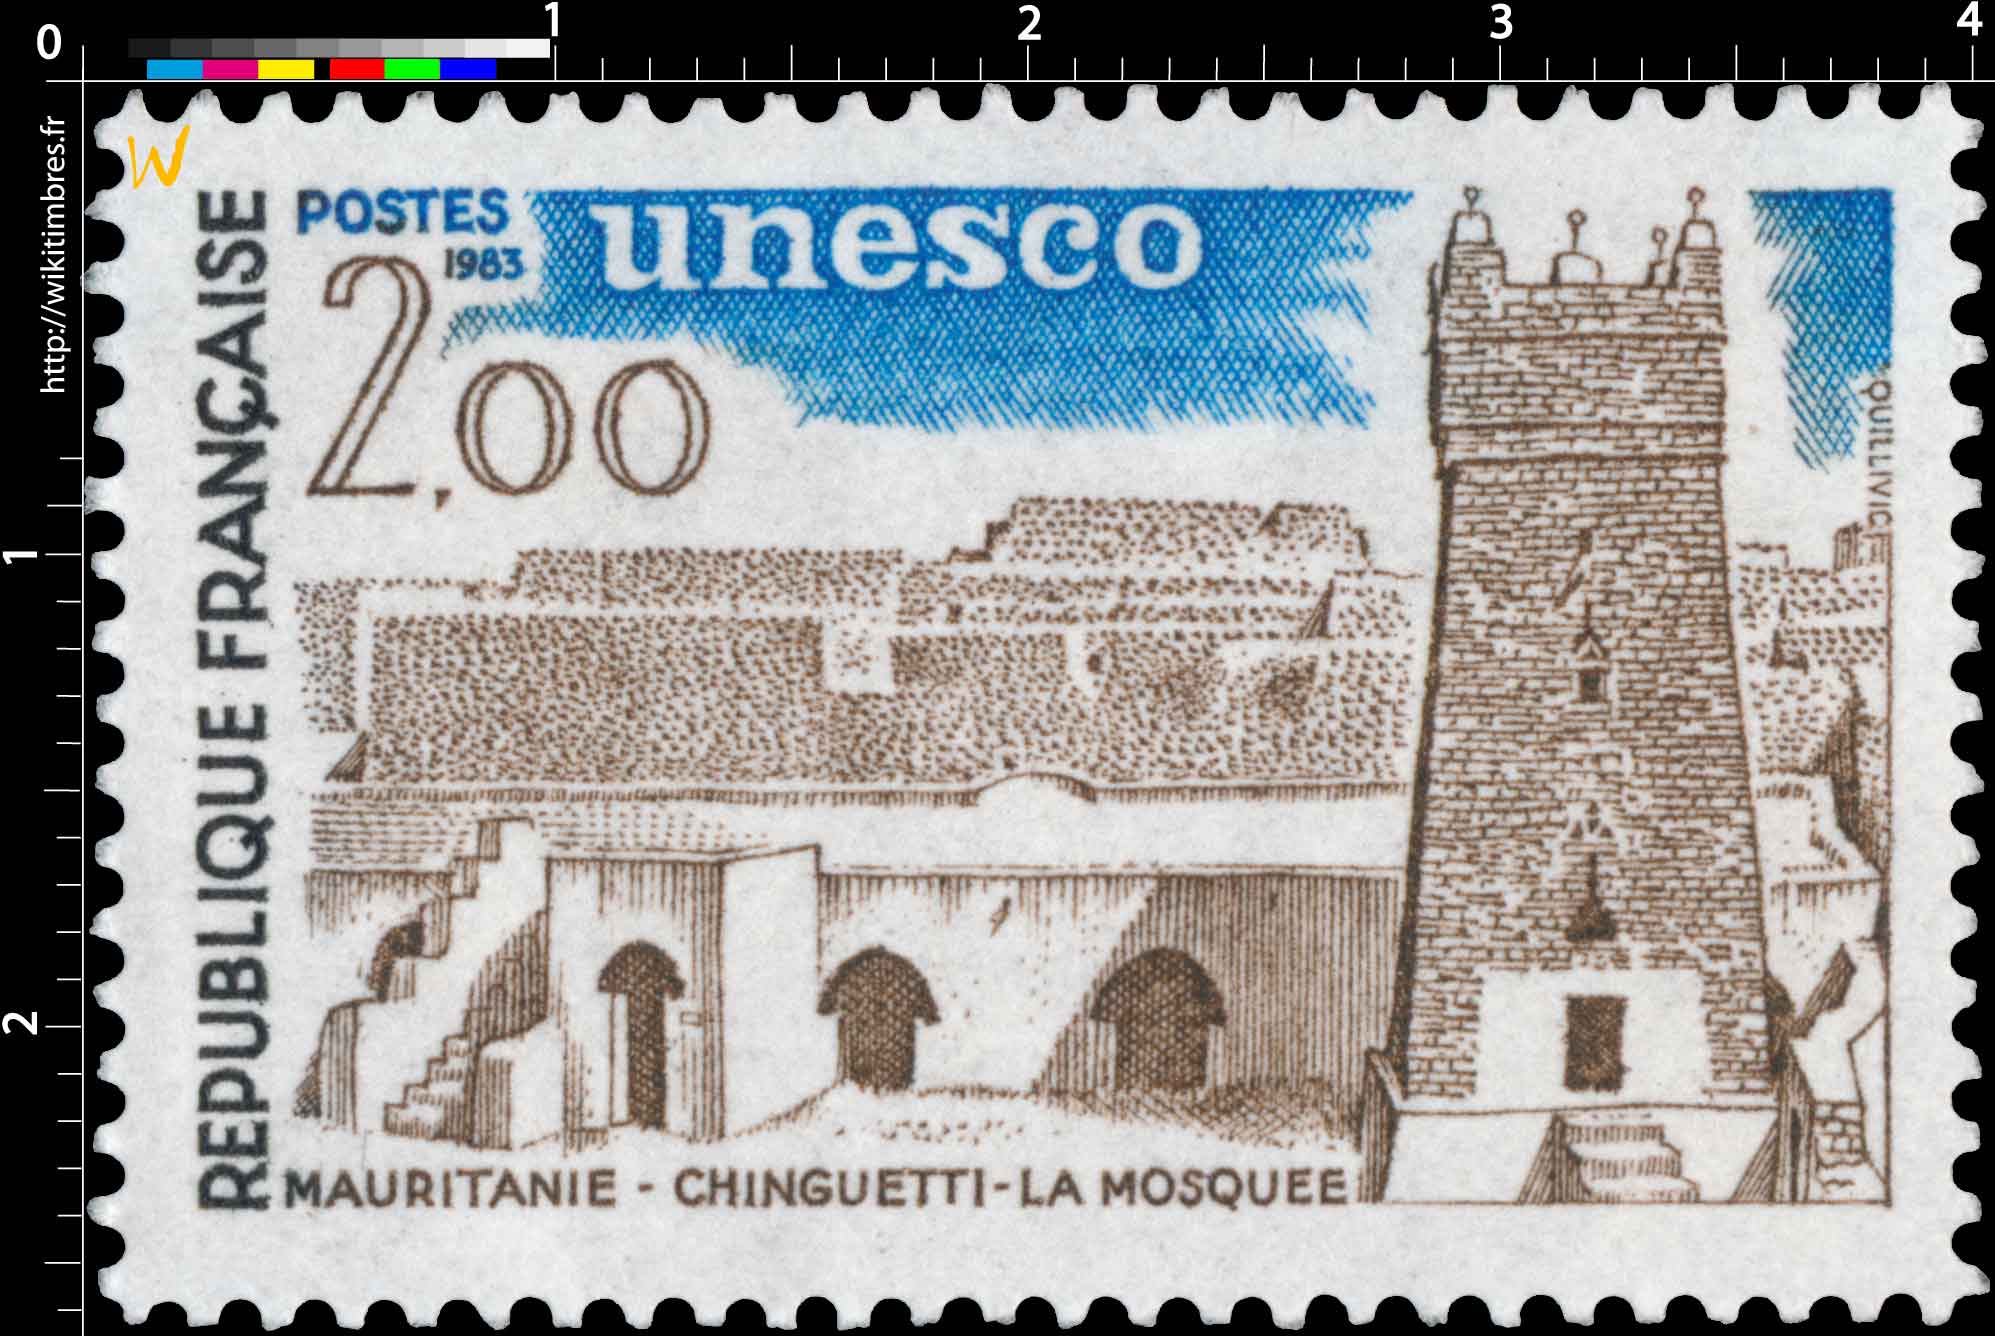 1983 Unesco MAURITANIE - CHINGUETTI - LA MOSQUÉE